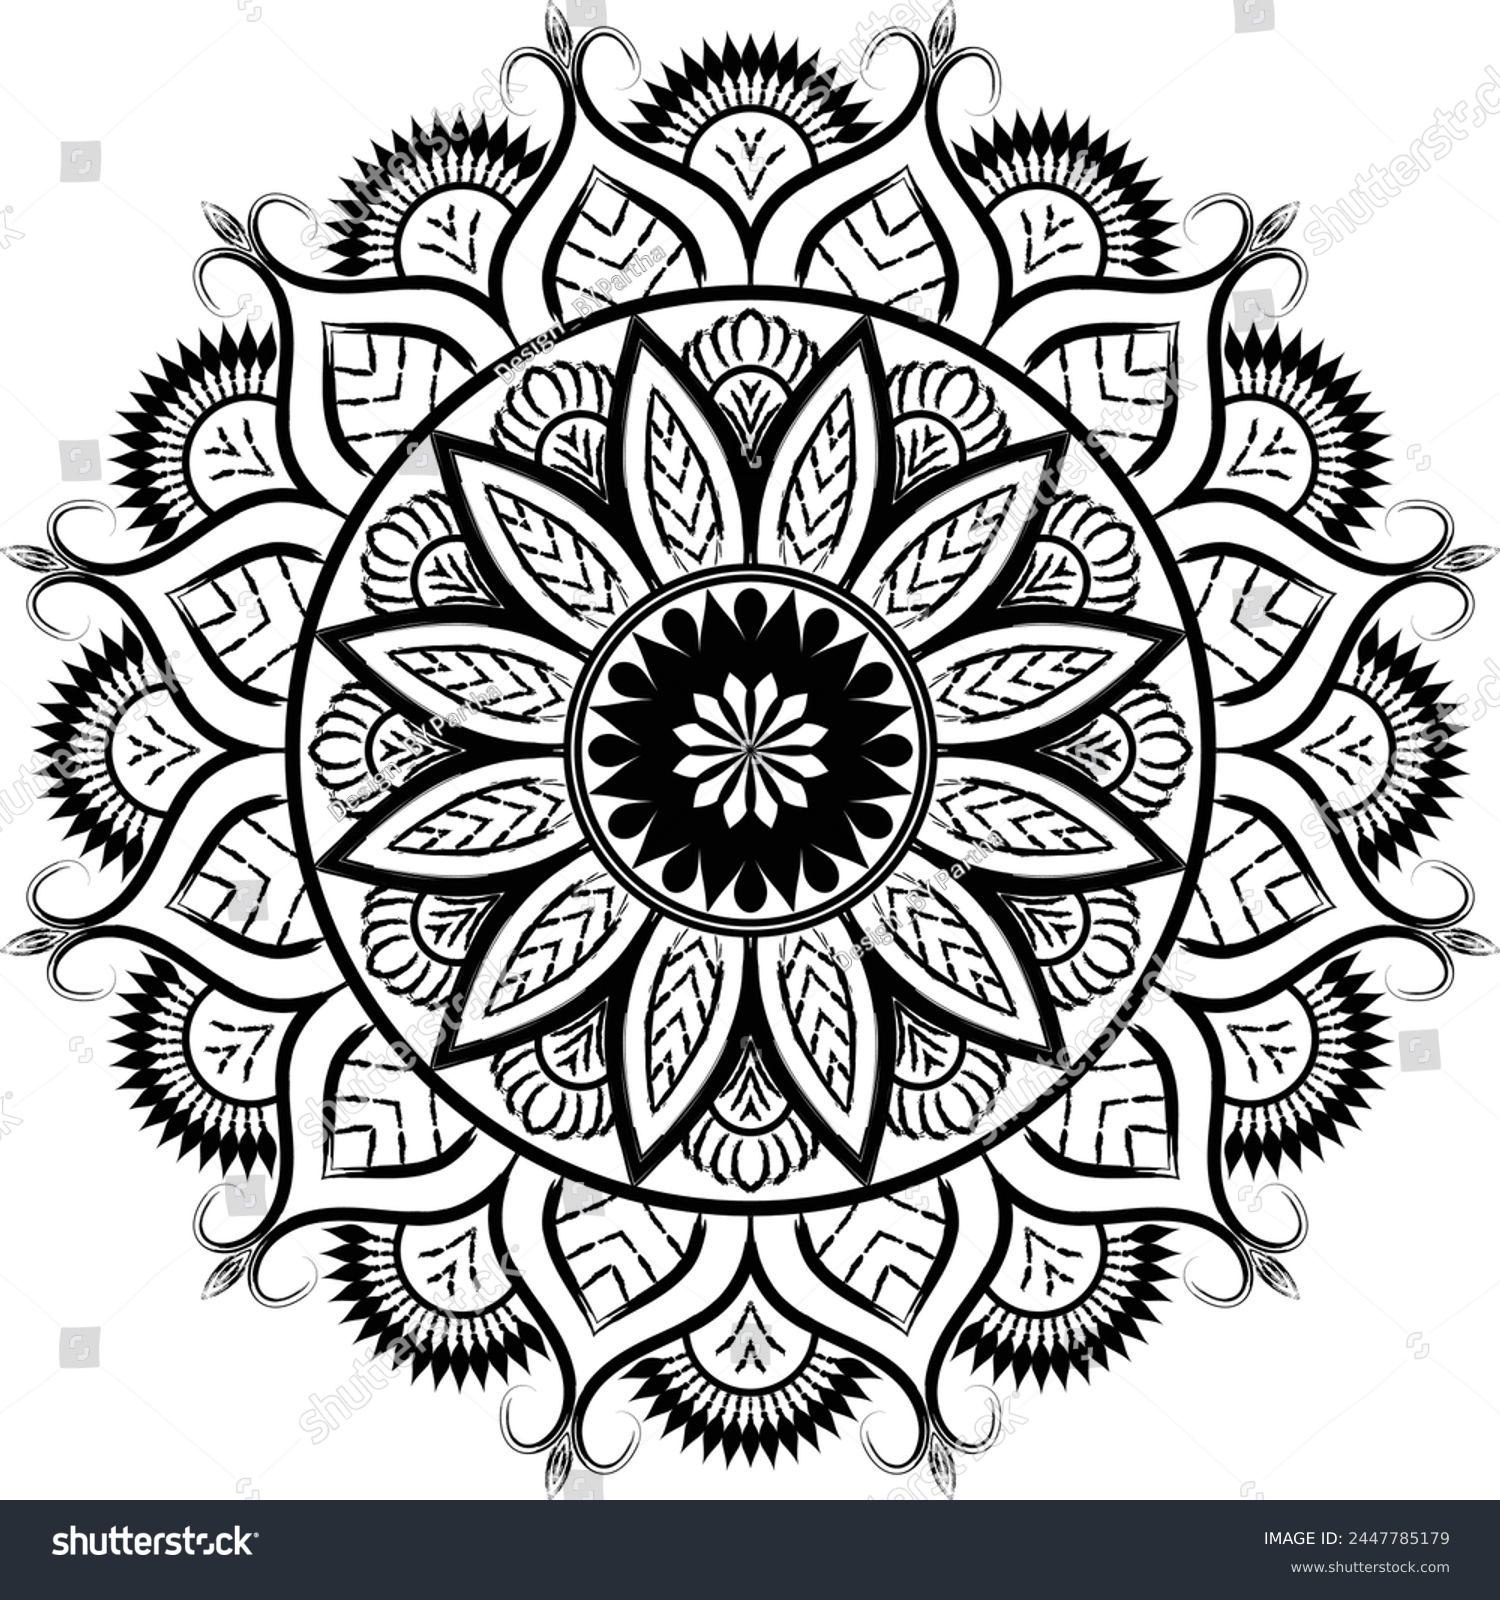 SVG of Beautiful circle pattern mandala art isolated on a white background, Indian style mandala art for festival decoration, decoration elements for meditation poster, henna, tattoo art svg